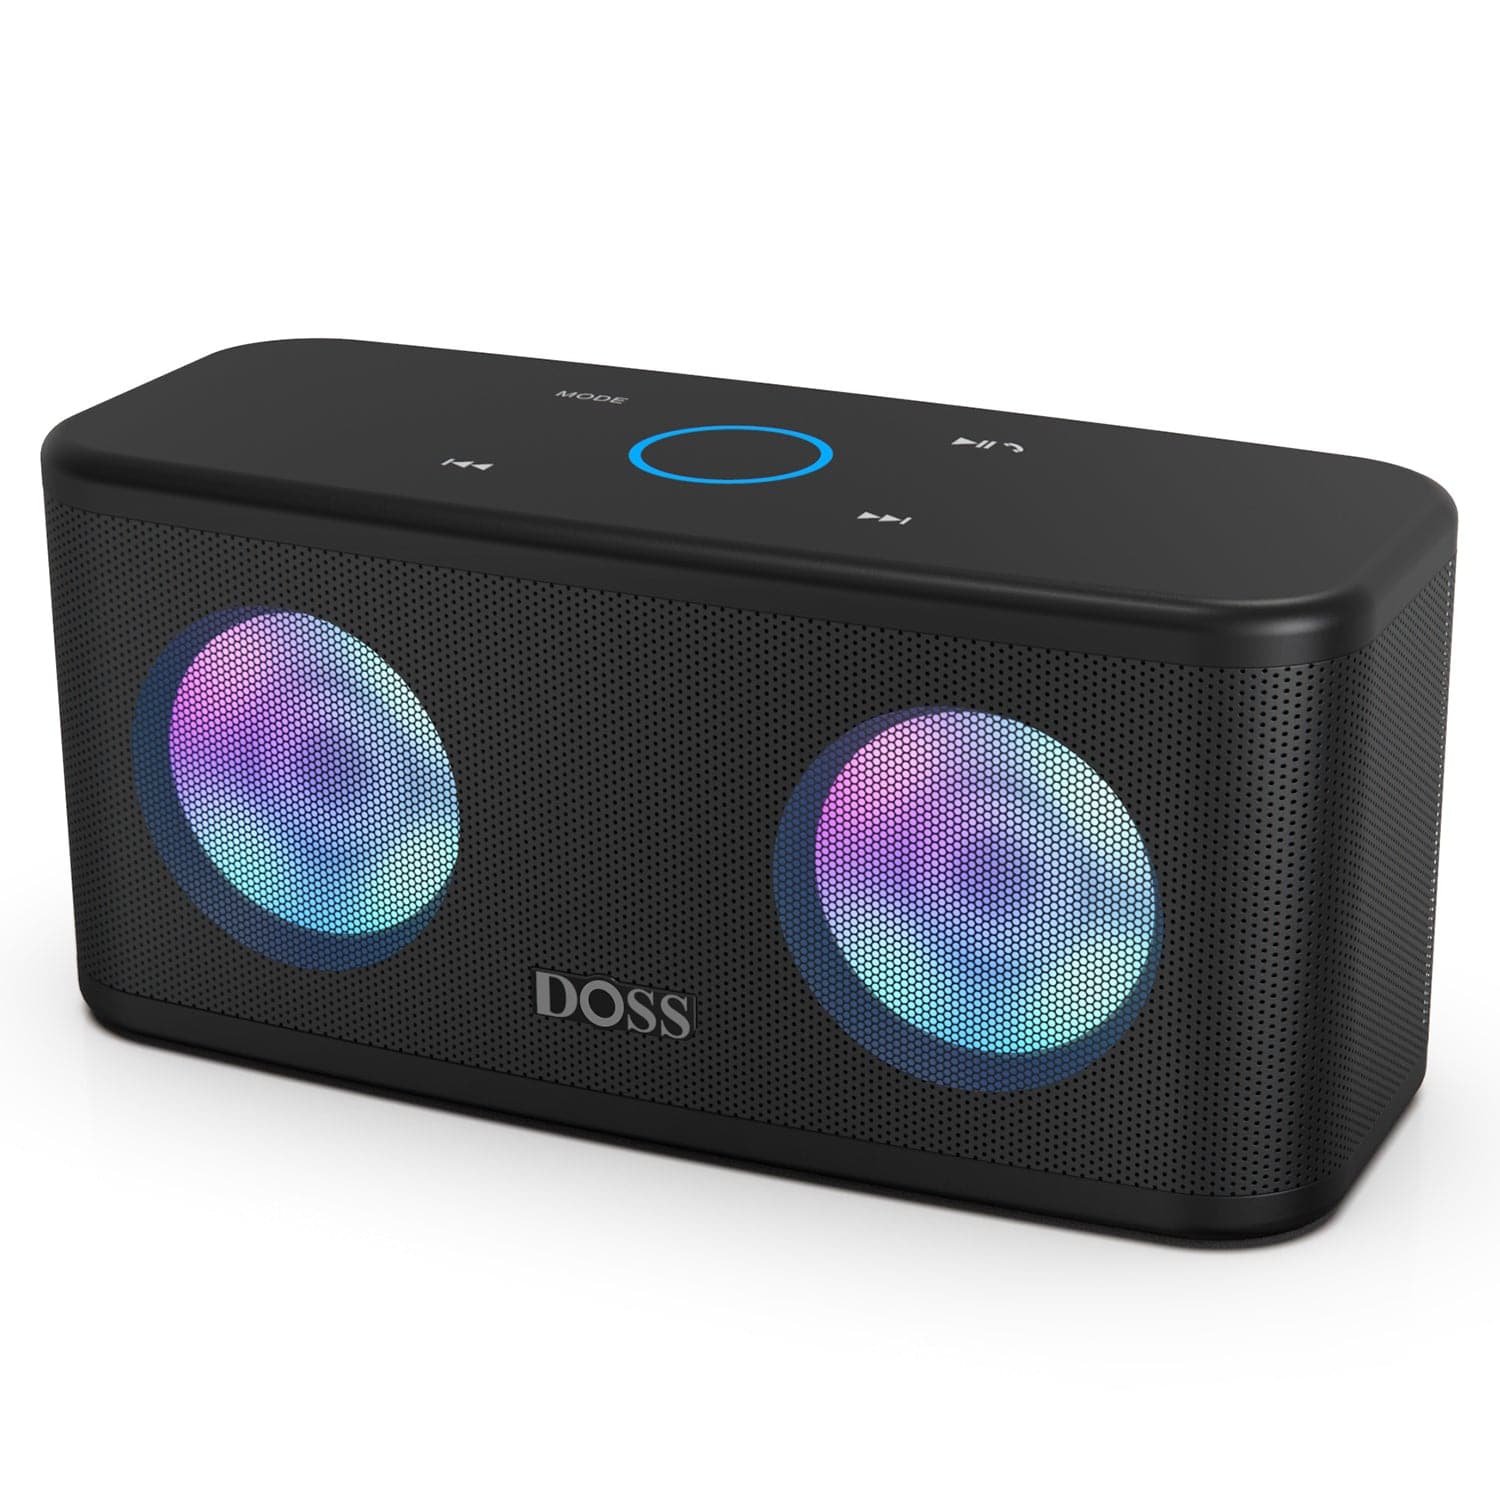 DOSS SoundBox Pro Plus - Bluetooth Speaker